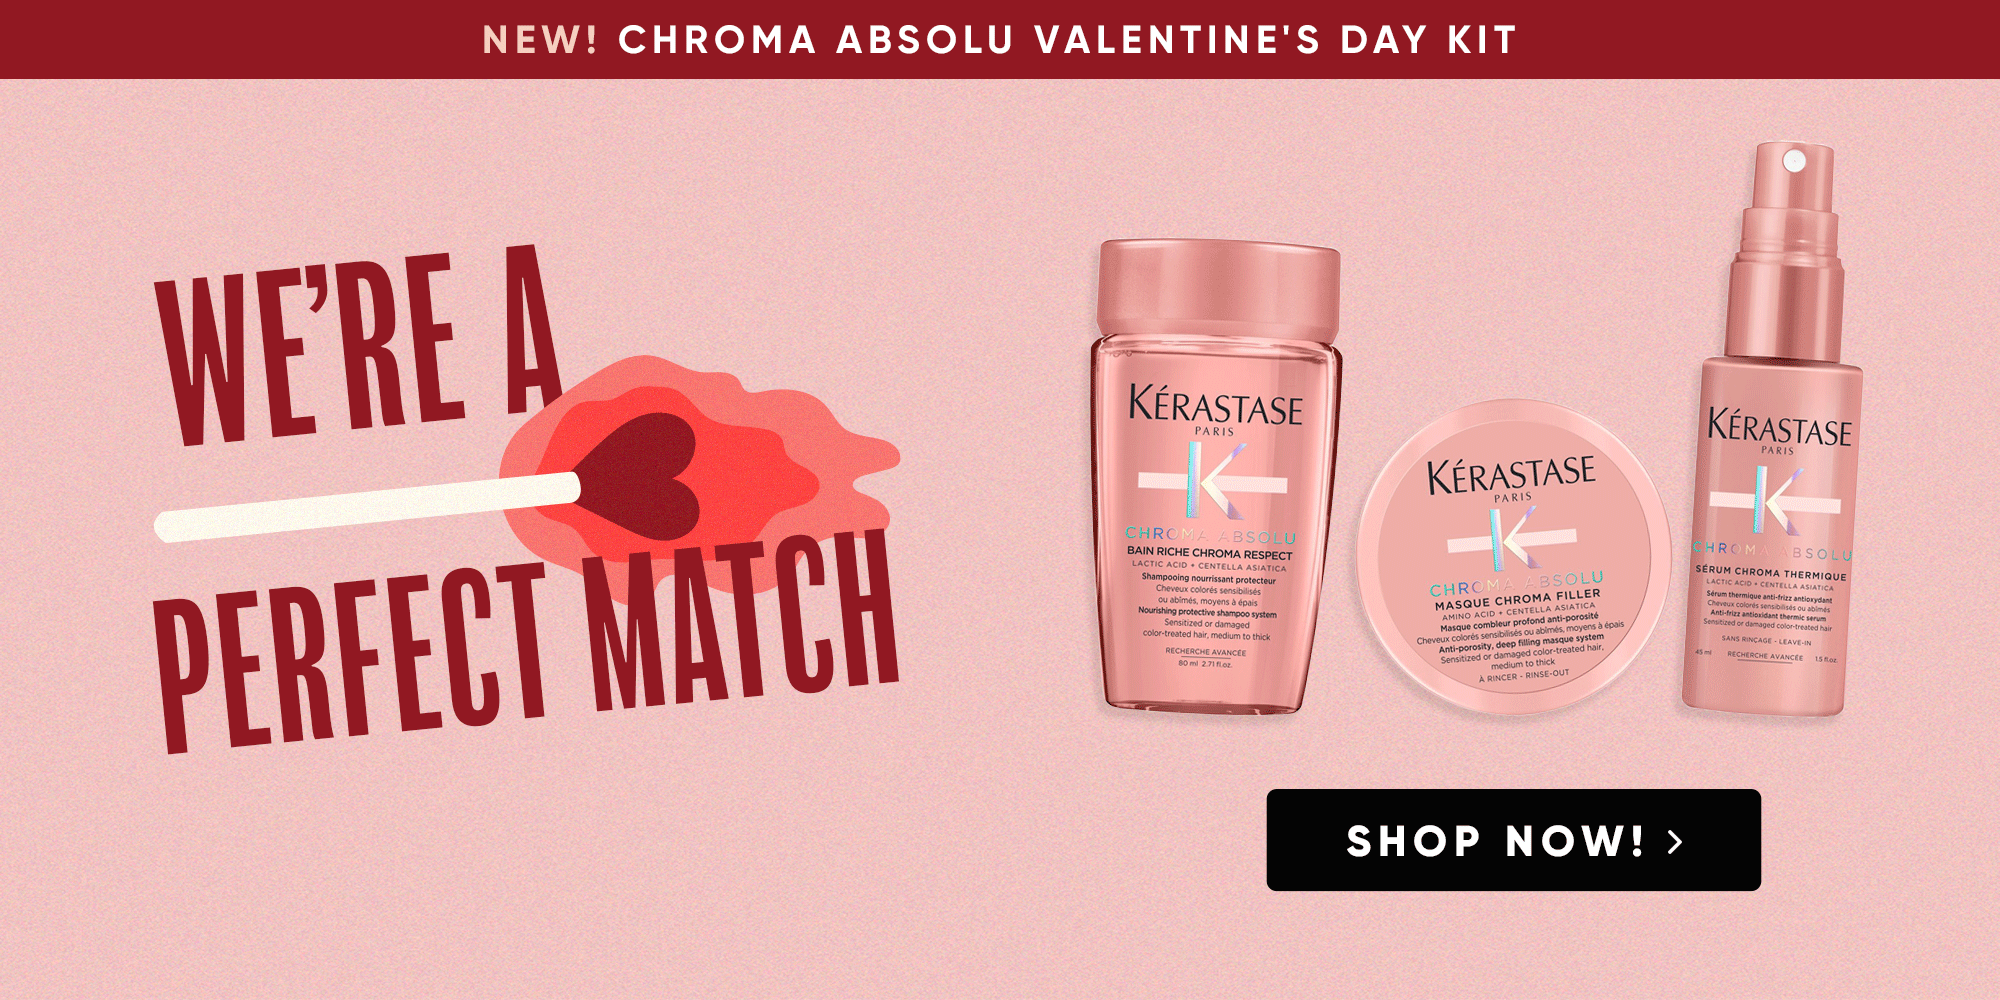 New! Chroma Absolu Valentine's Day kit - Shop now